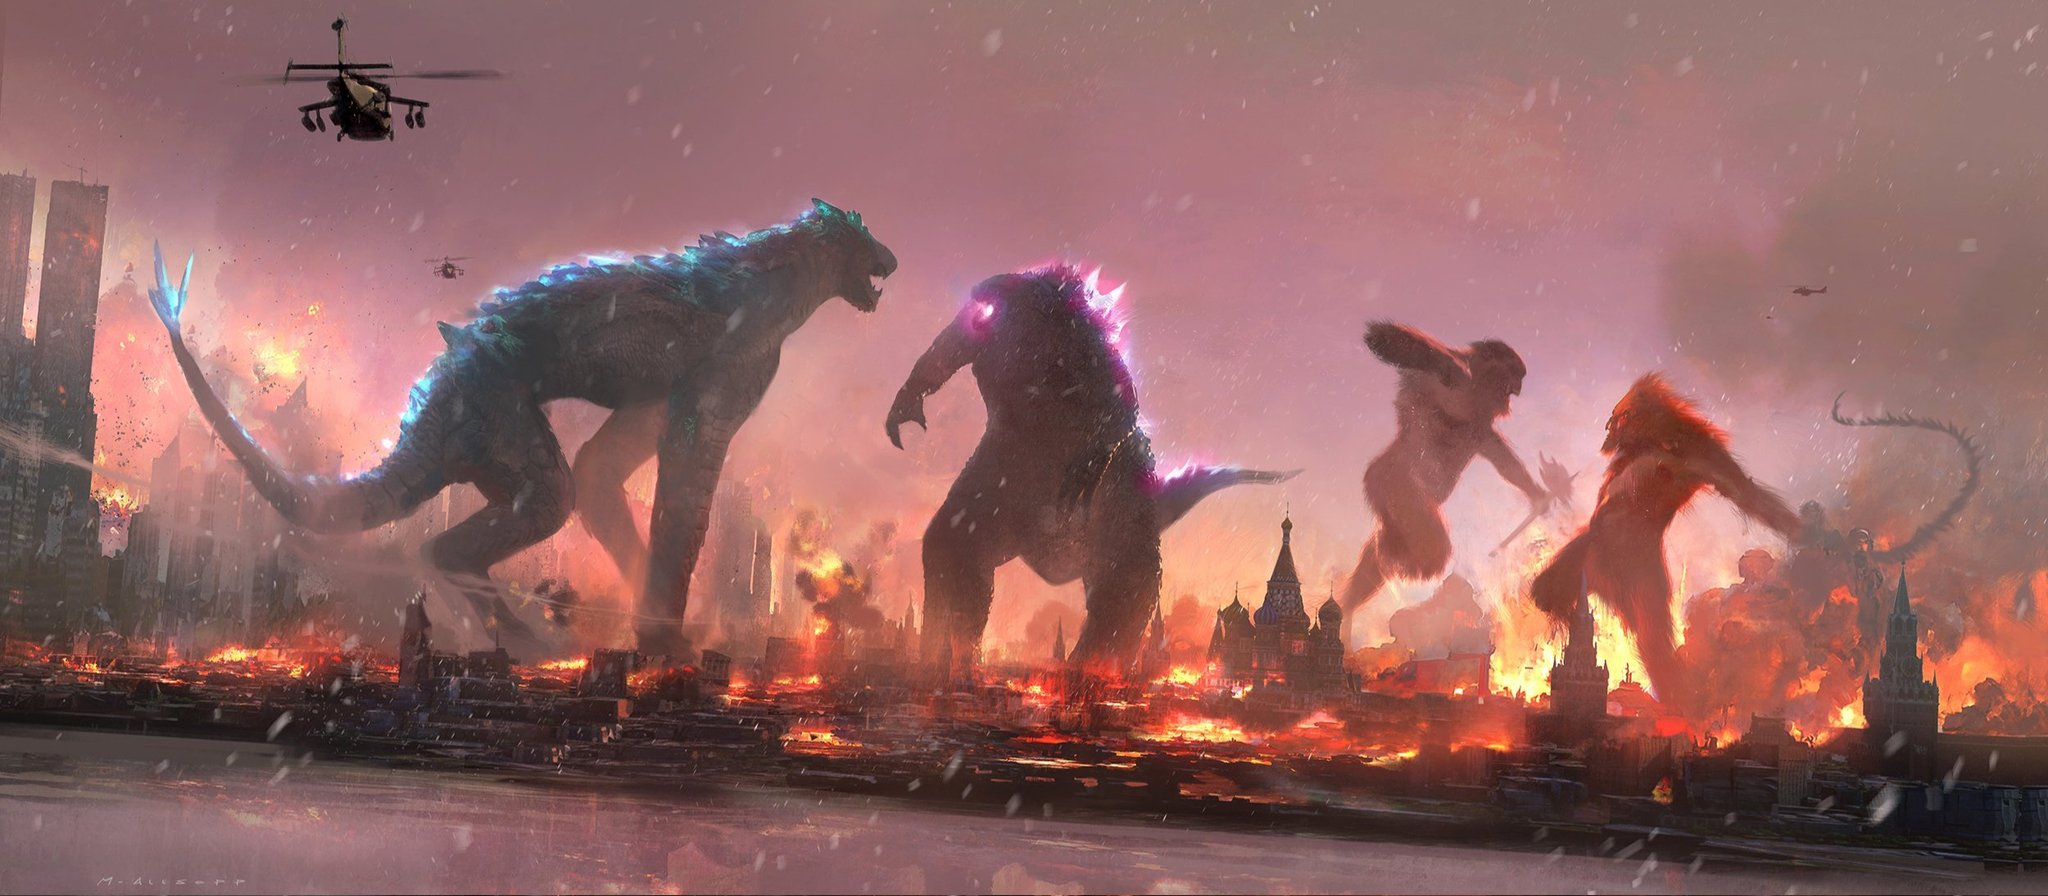 Godzilla x Kong concept art